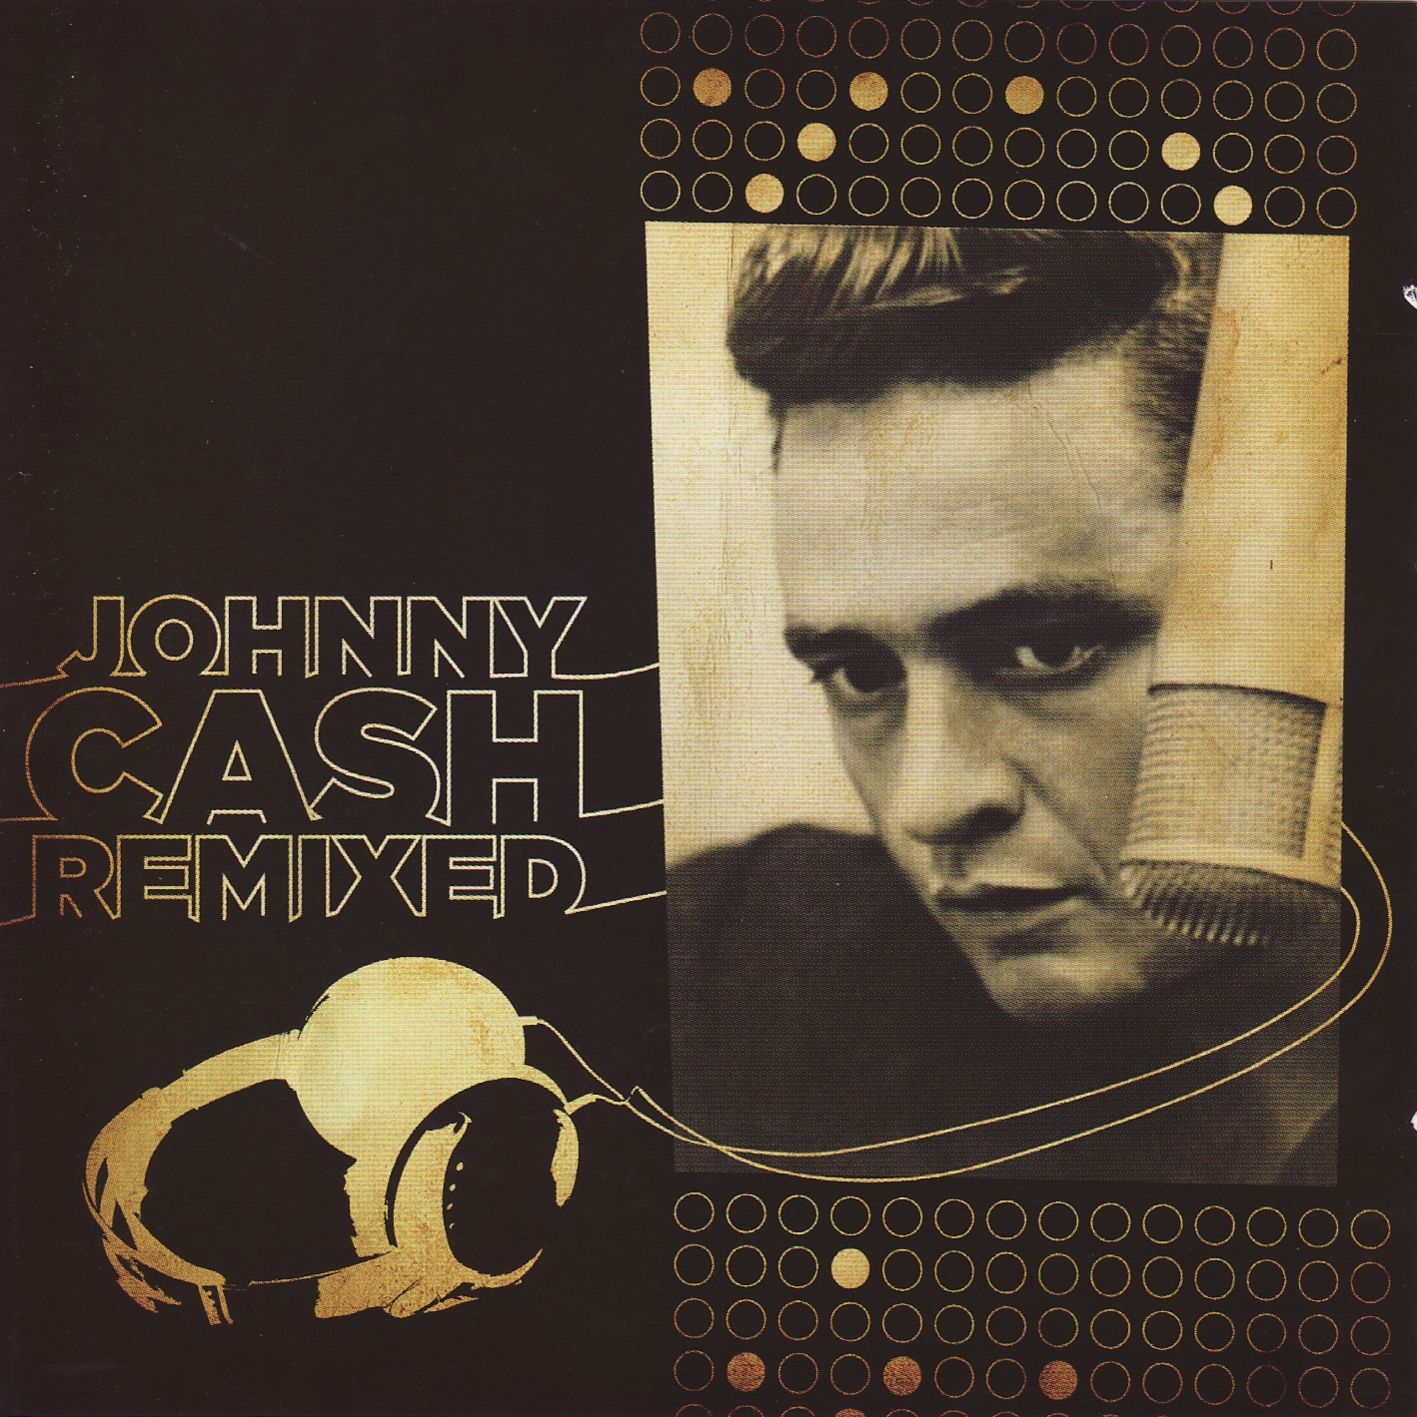 Johnny Cash Remixed album art